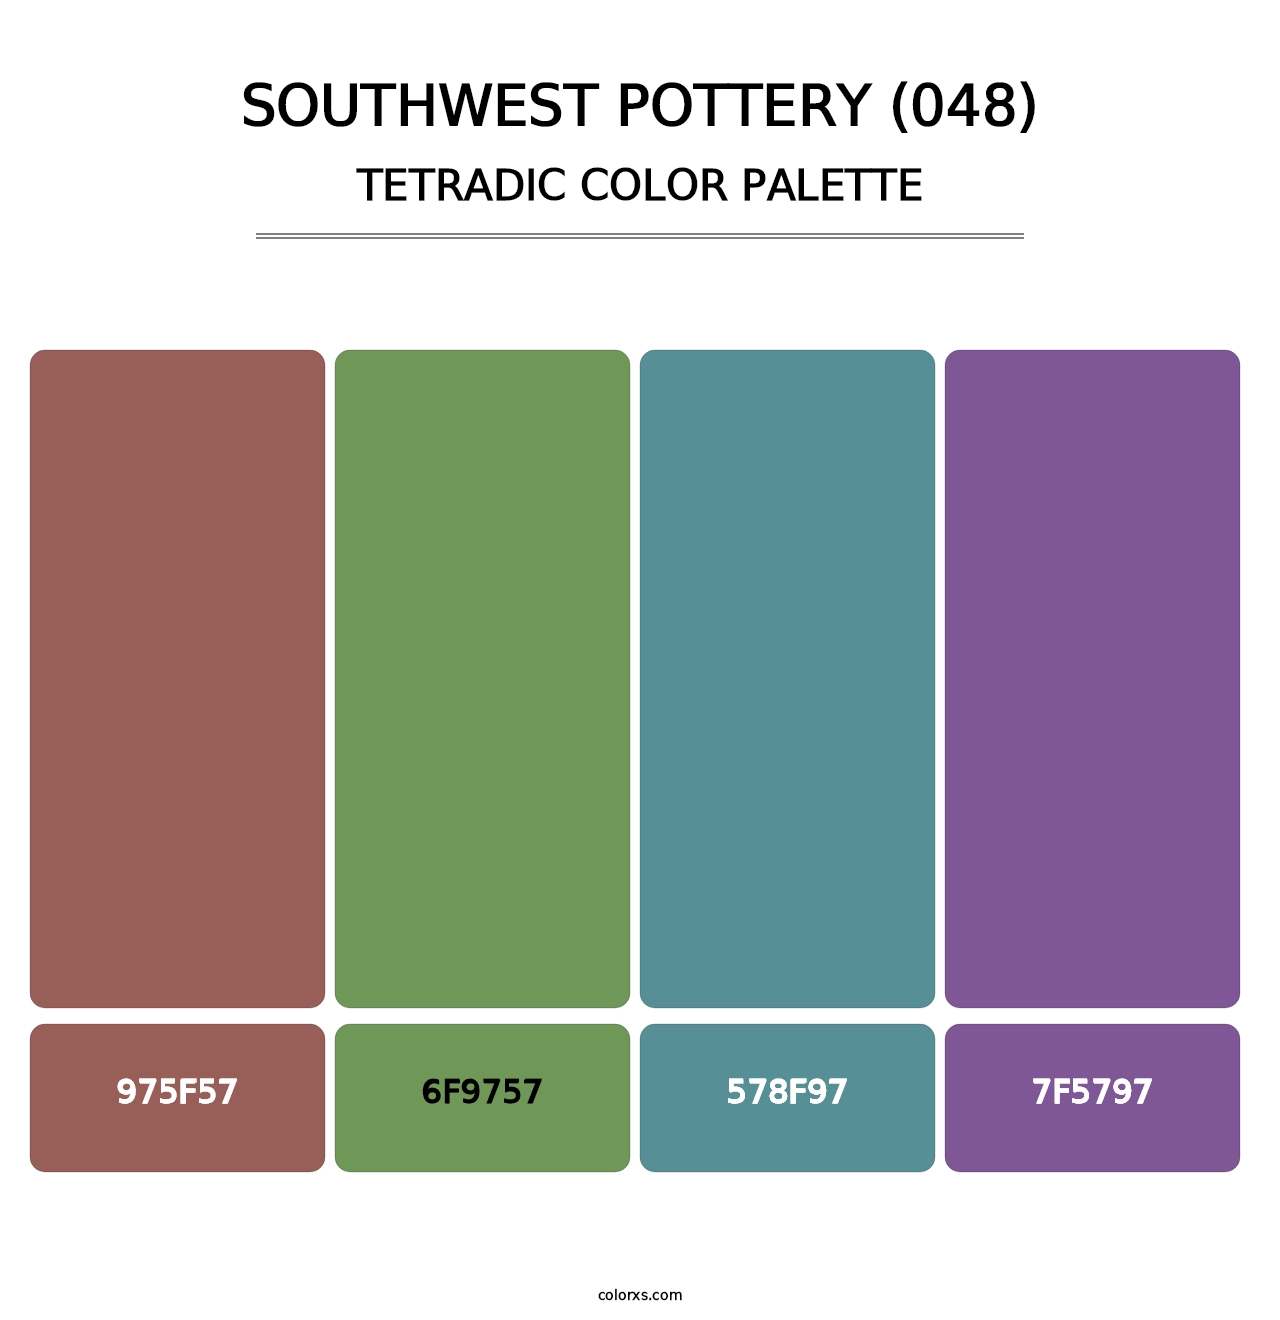 Southwest Pottery (048) - Tetradic Color Palette